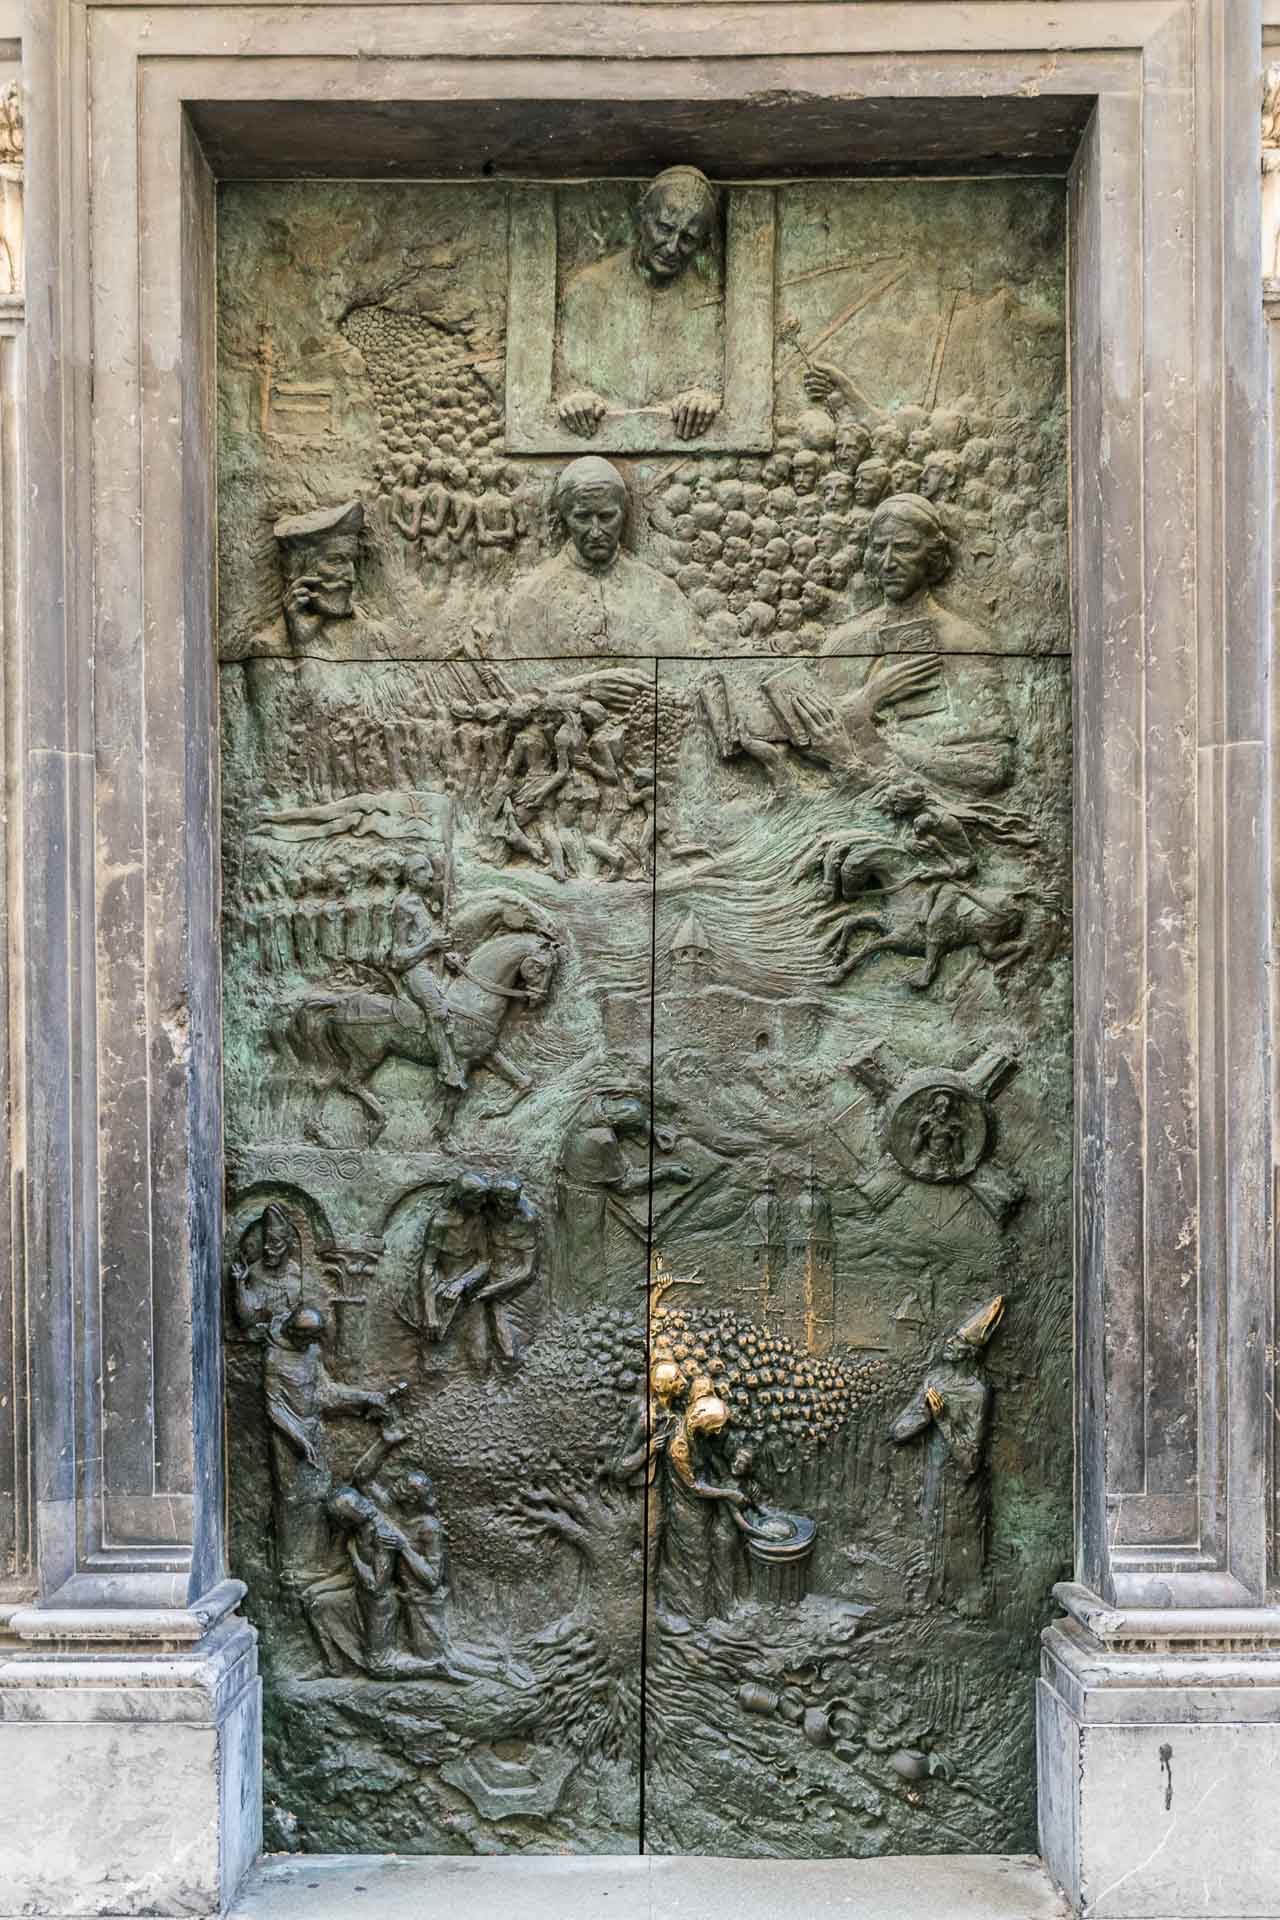 The door of the main church of Ljubljana telling the history of Ljubljana